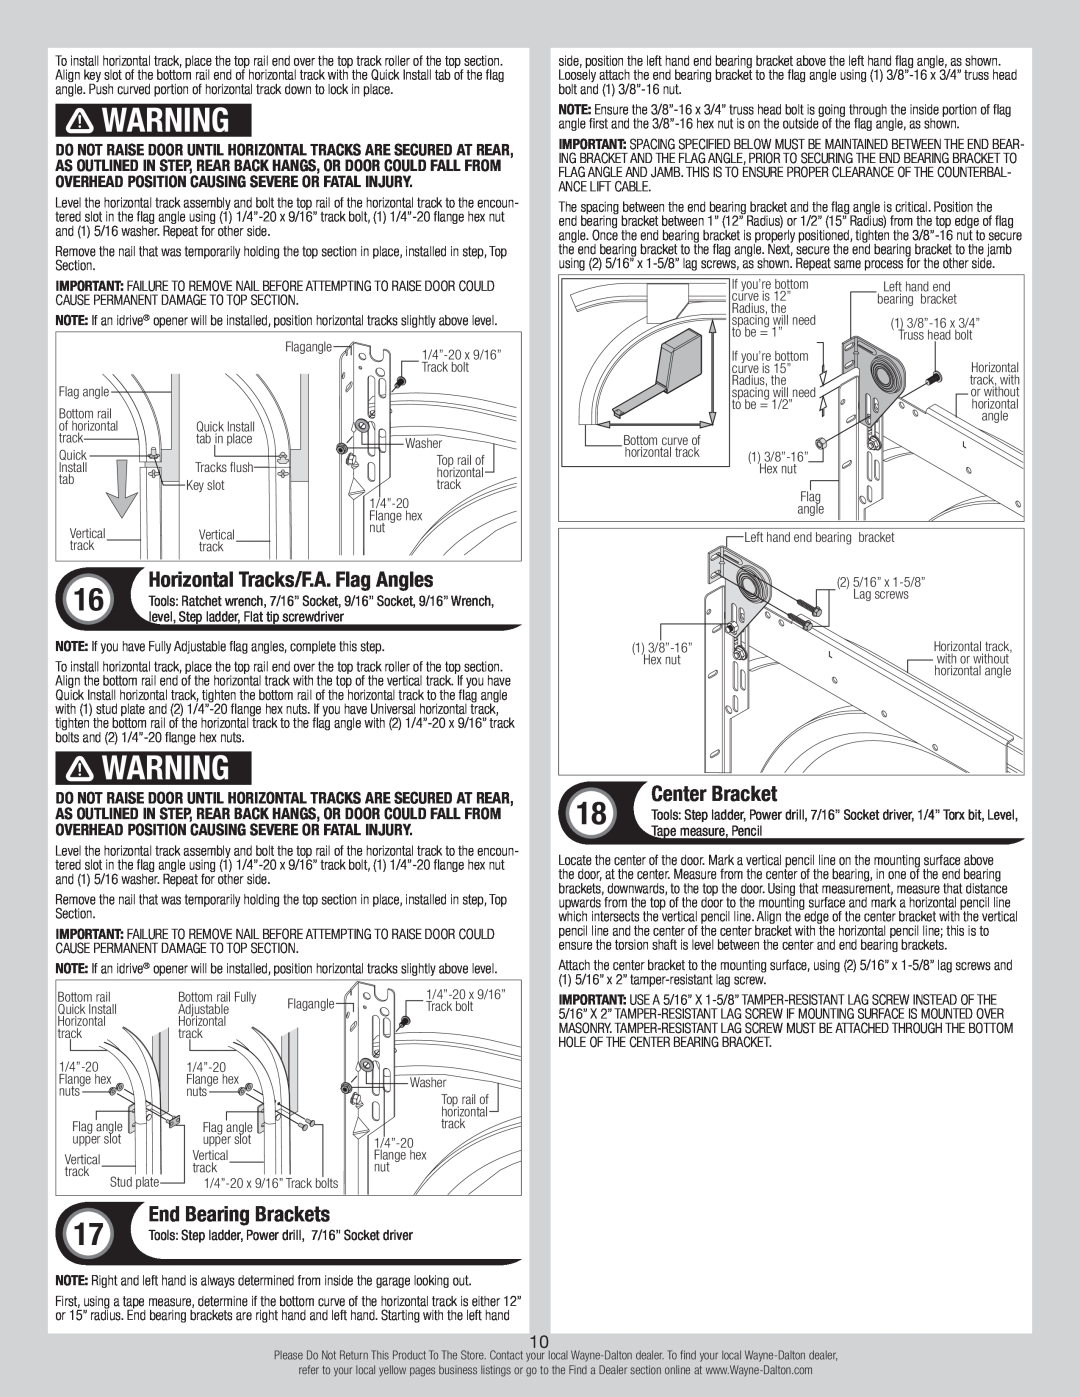 Wayne-Dalton 8700 installation instructions Horizontal Tracks/F.A. Flag Angles, Center Bracket, End Bearing Brackets 